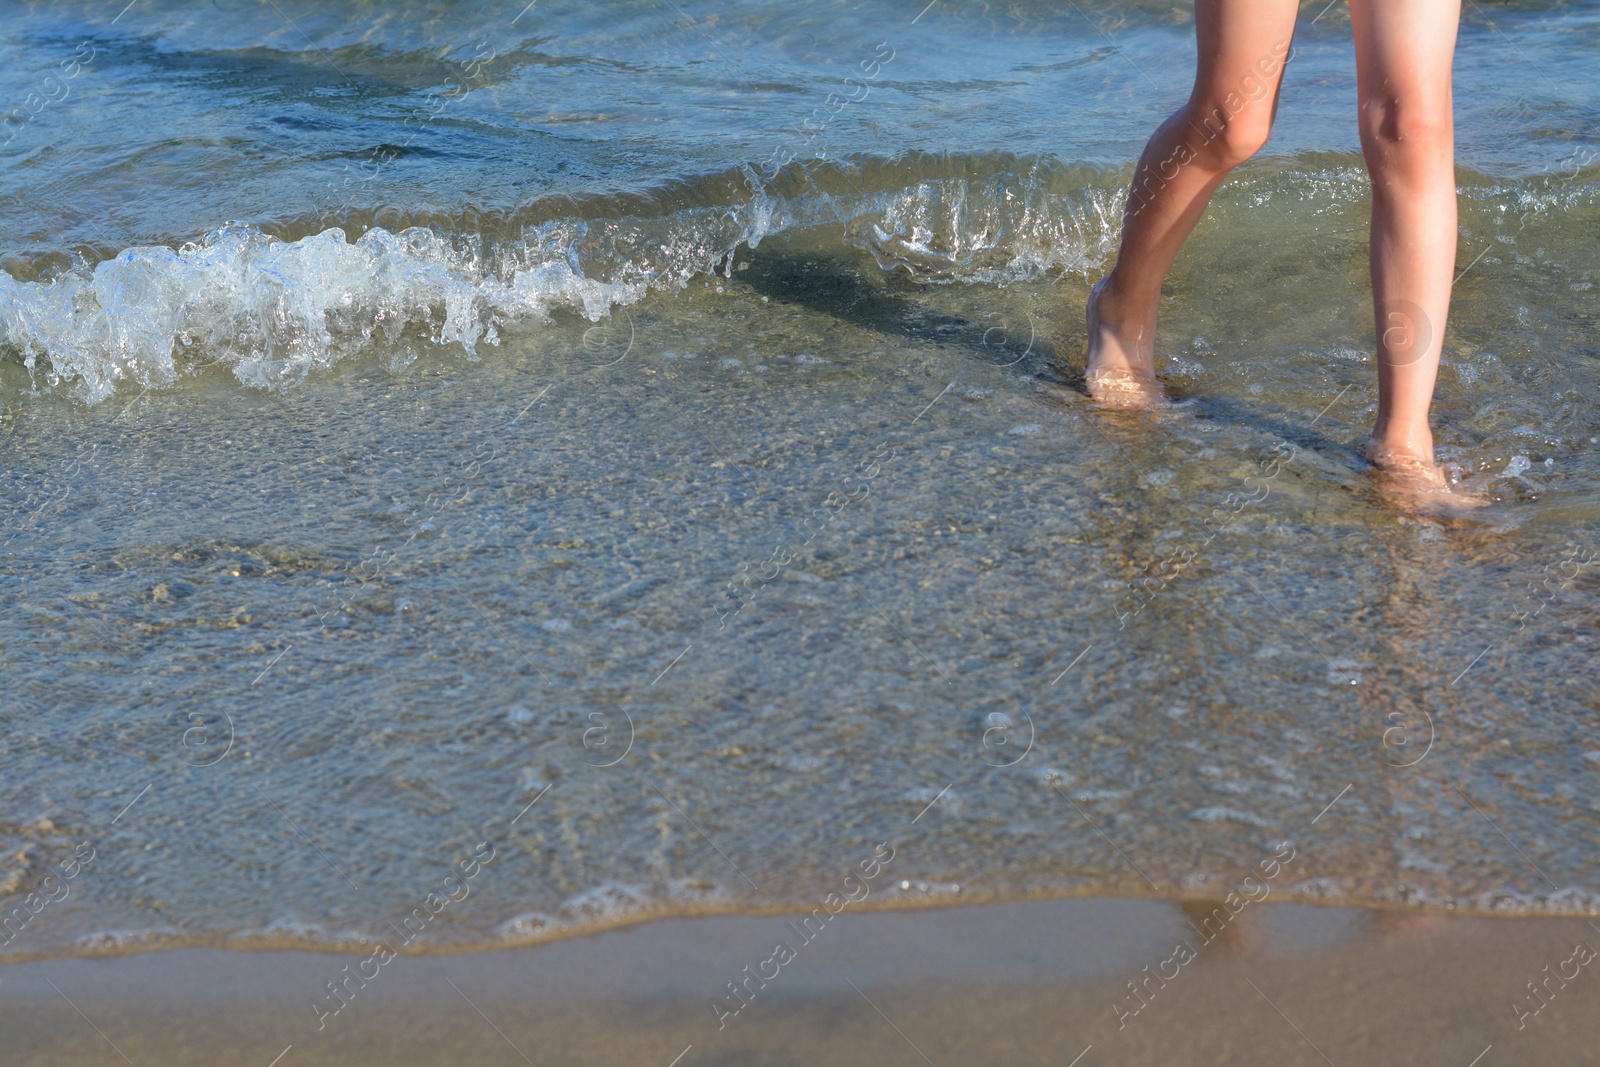 Photo of Child walking through water on seashore, closeup of legs